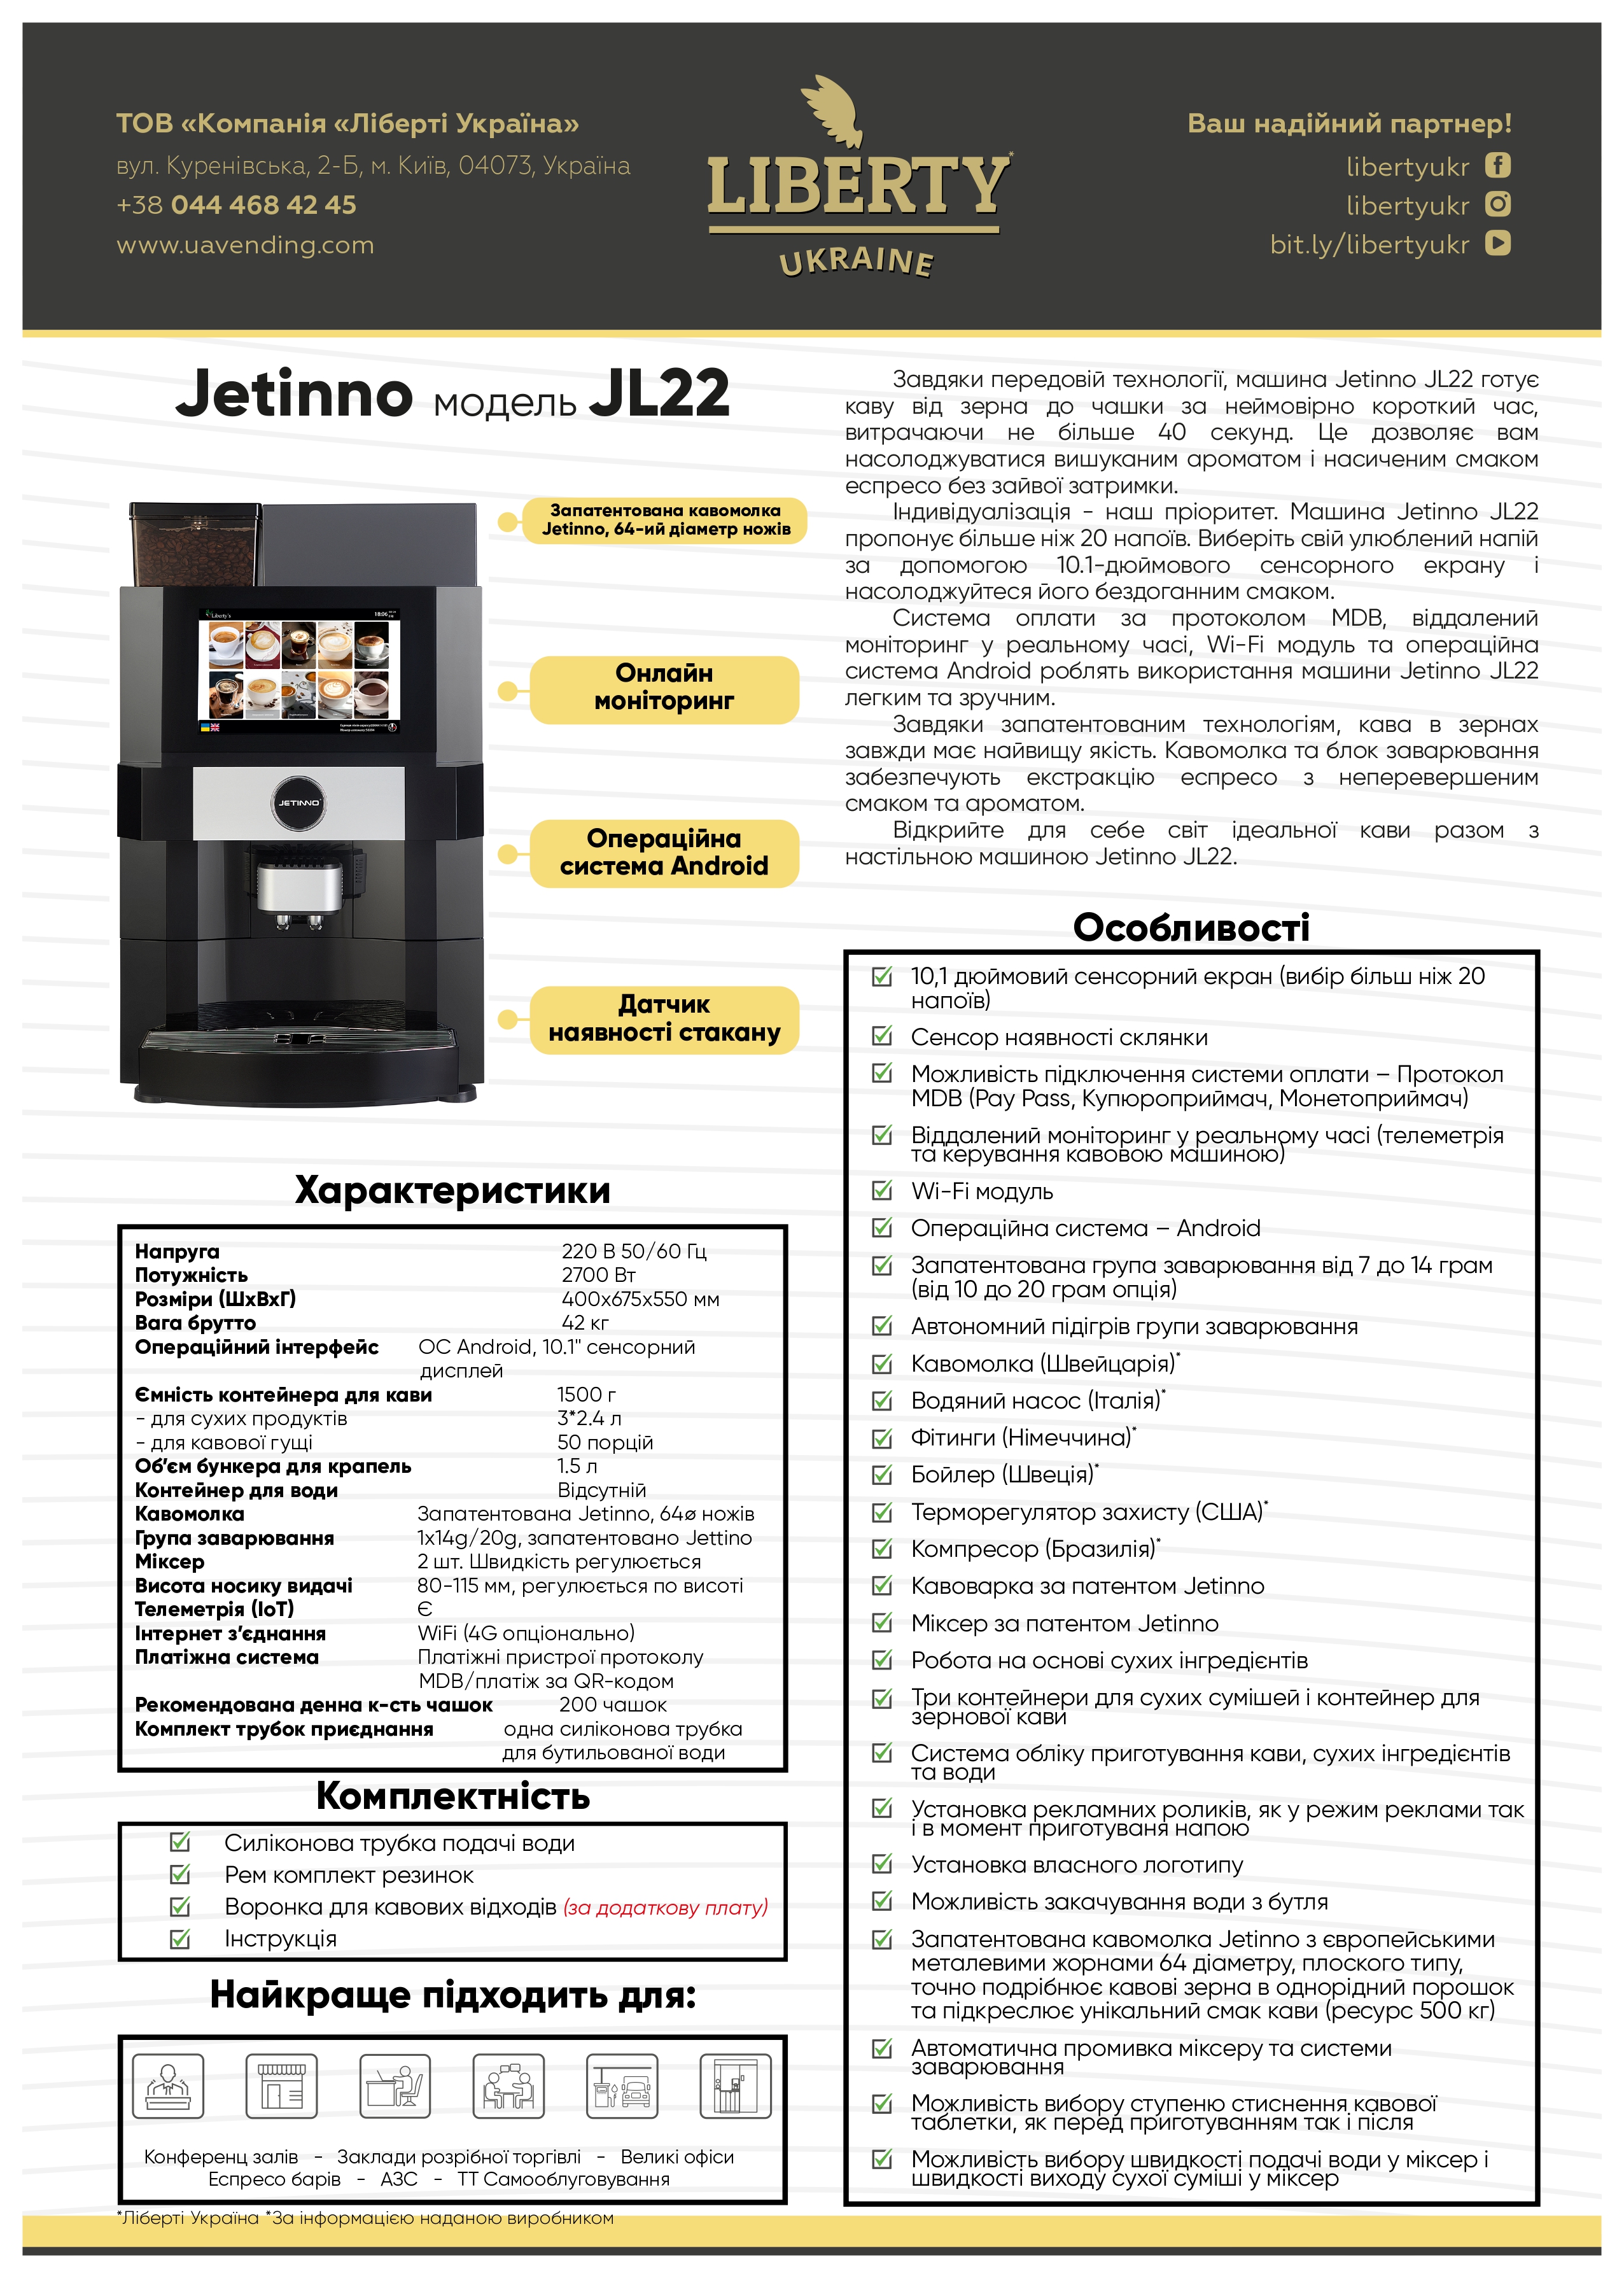 Jetinno_JL22